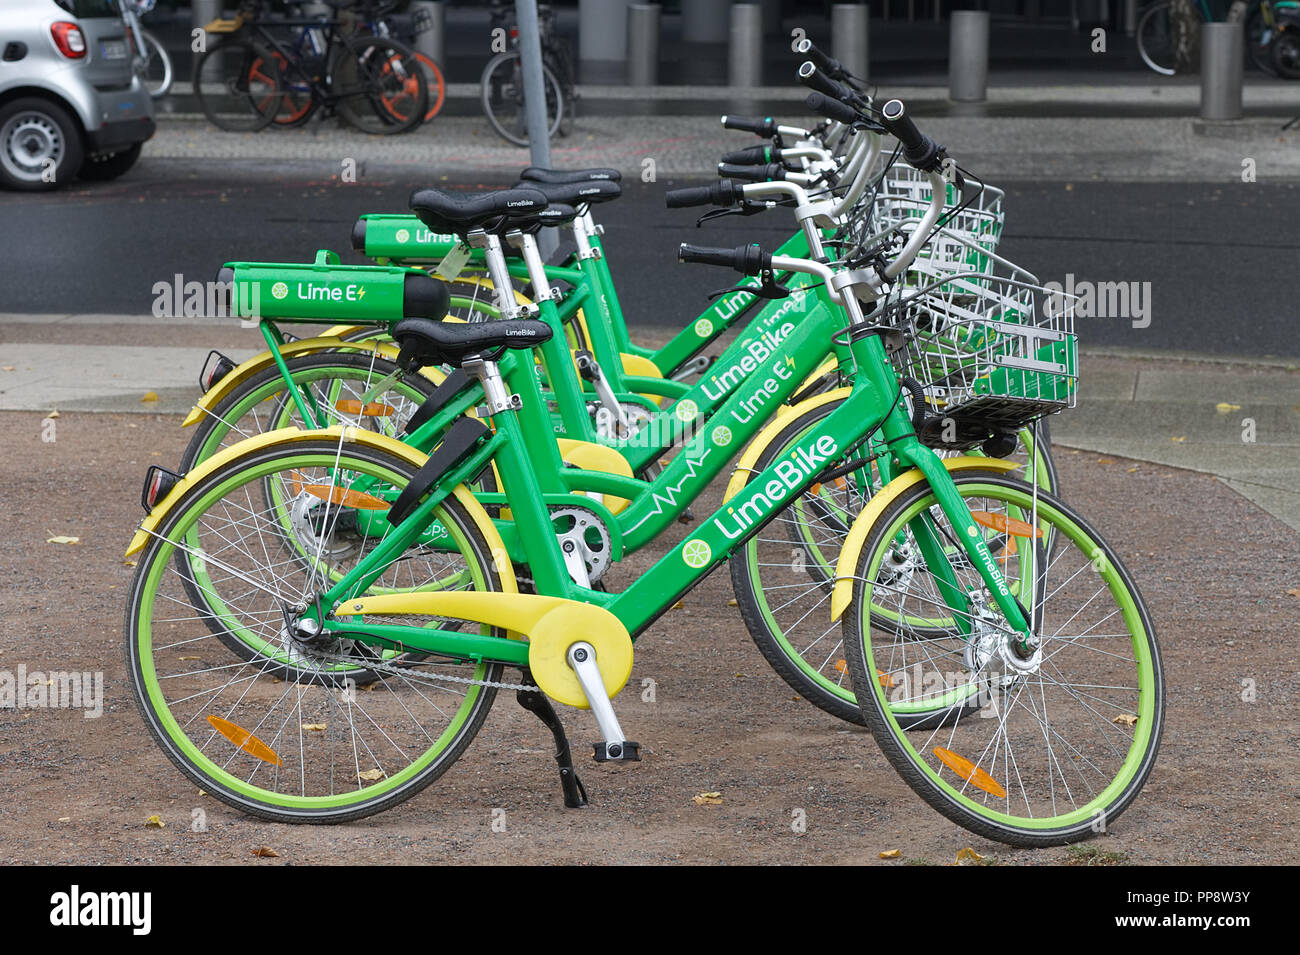 Kalk e Bike Sharing in Berlin, Deutschland Stockfoto